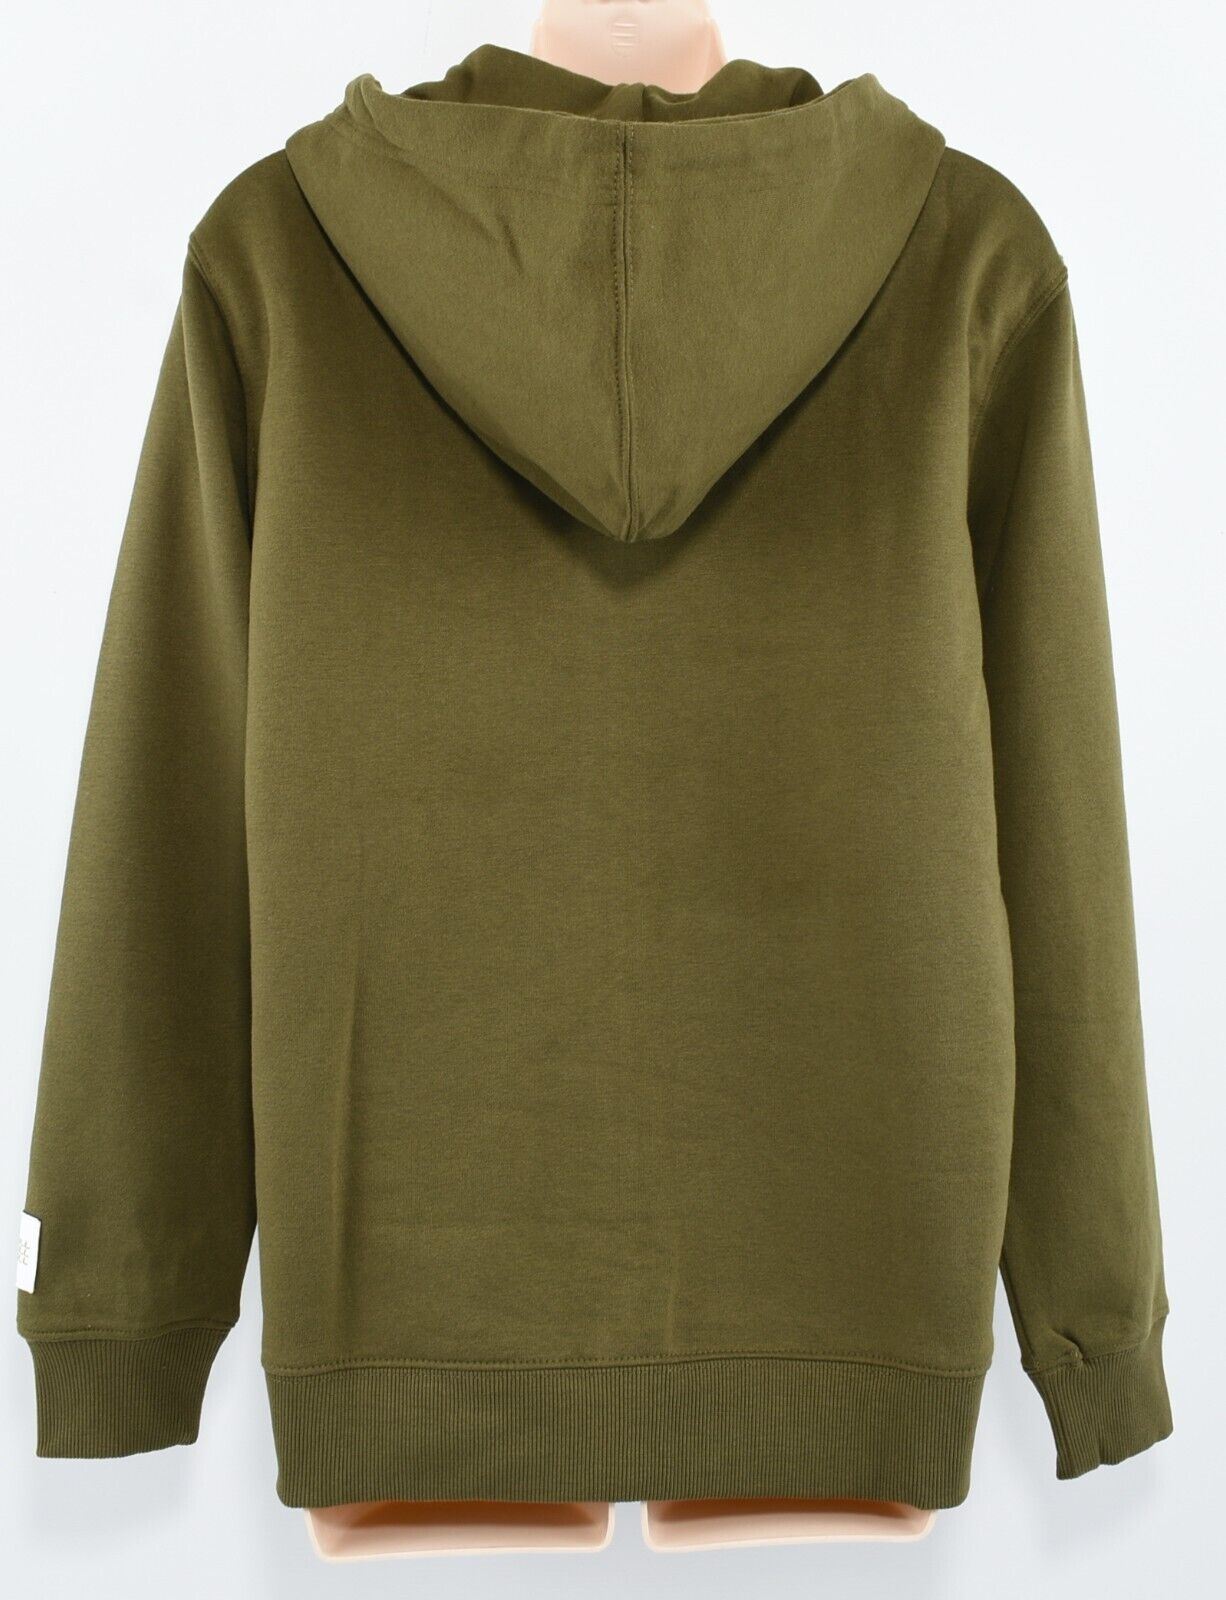 O'NEILL Women's CALI Full Zip Hoodie Jacket, Winter Moss (Green), size S - UK 10